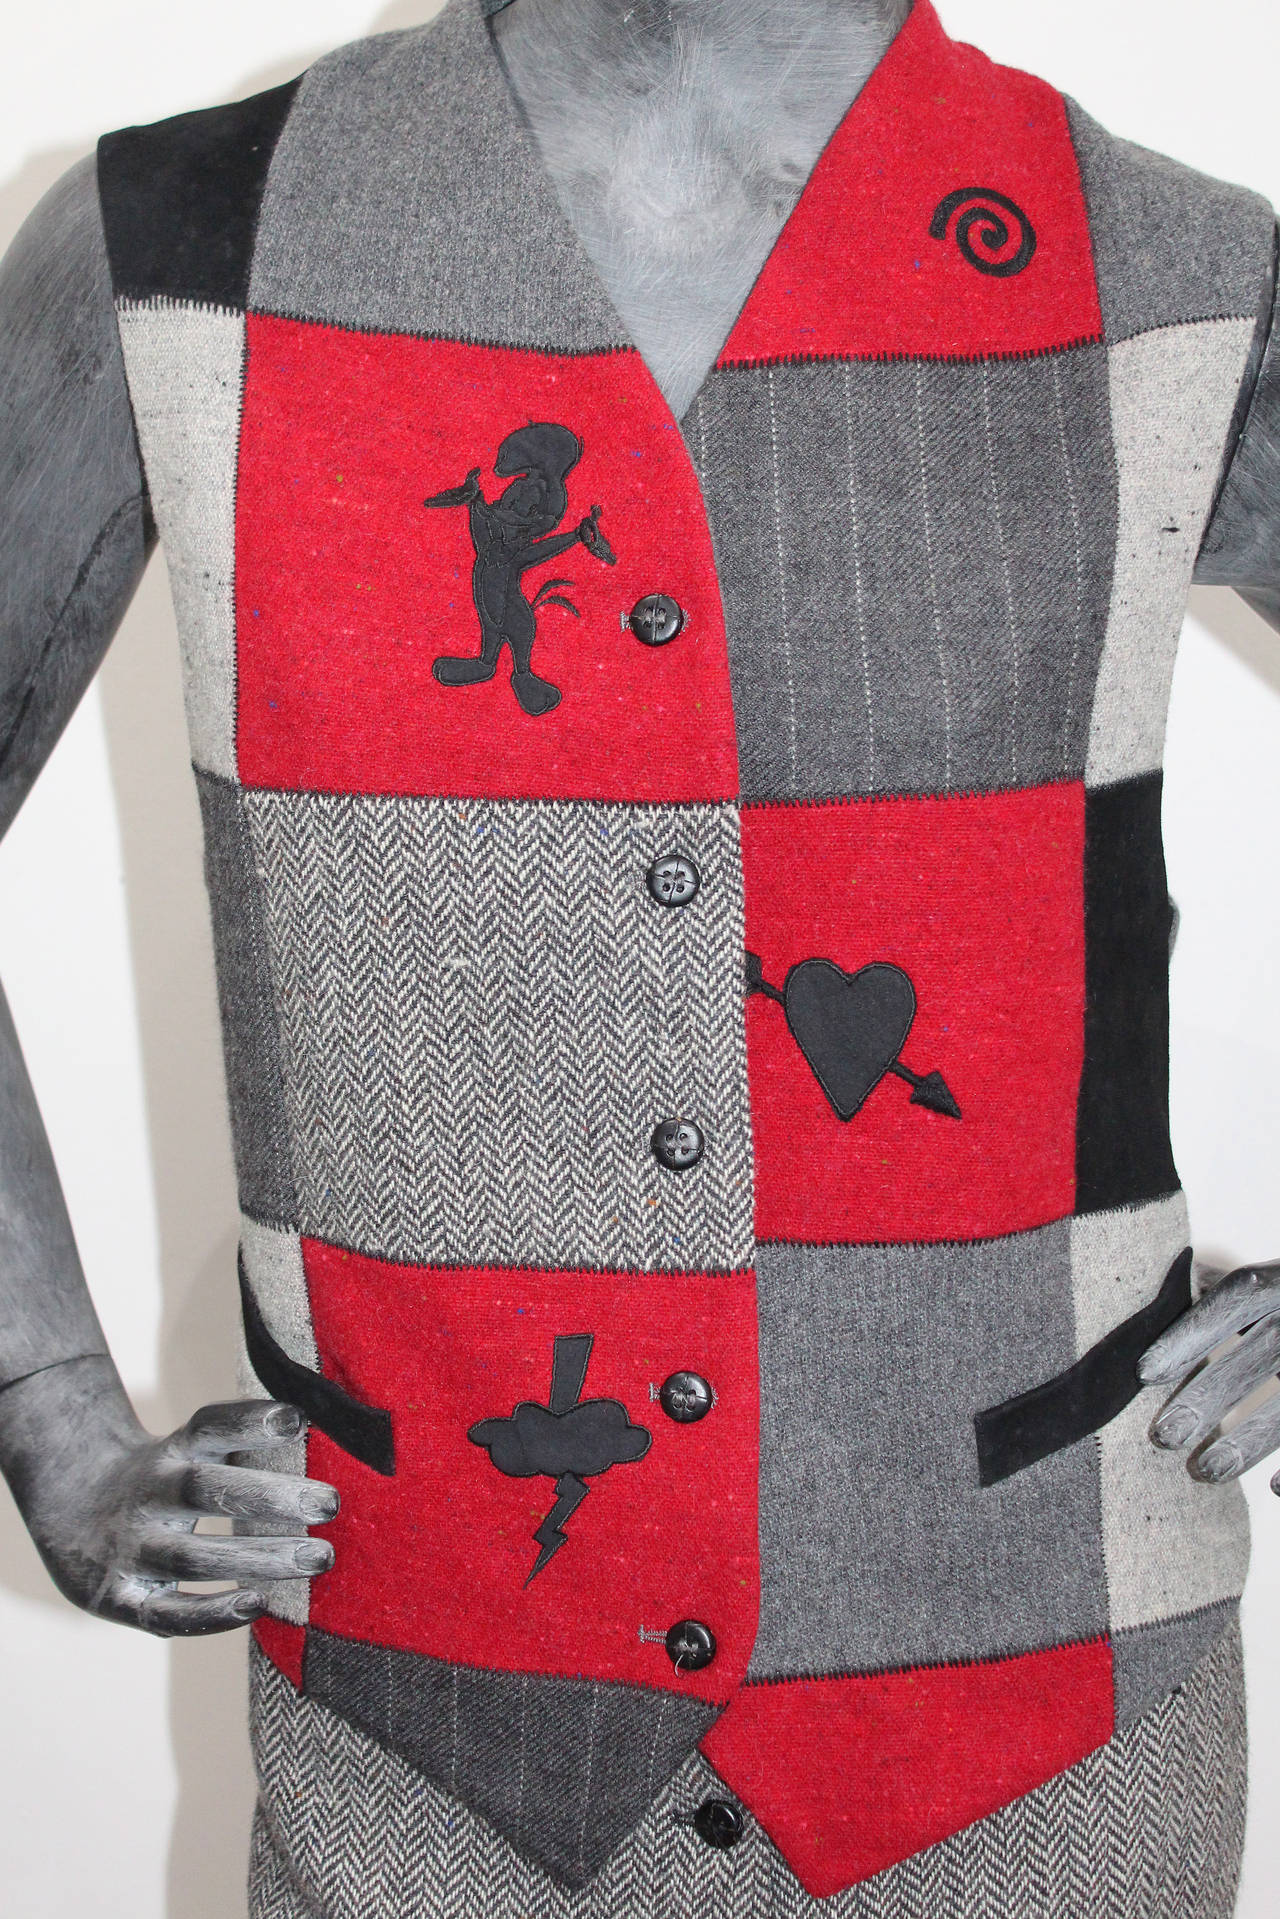 Women's Rare Jean Charles De Castelbajac 'Woody Woodpecker' 3 Piece Tweed Suit c. 1994